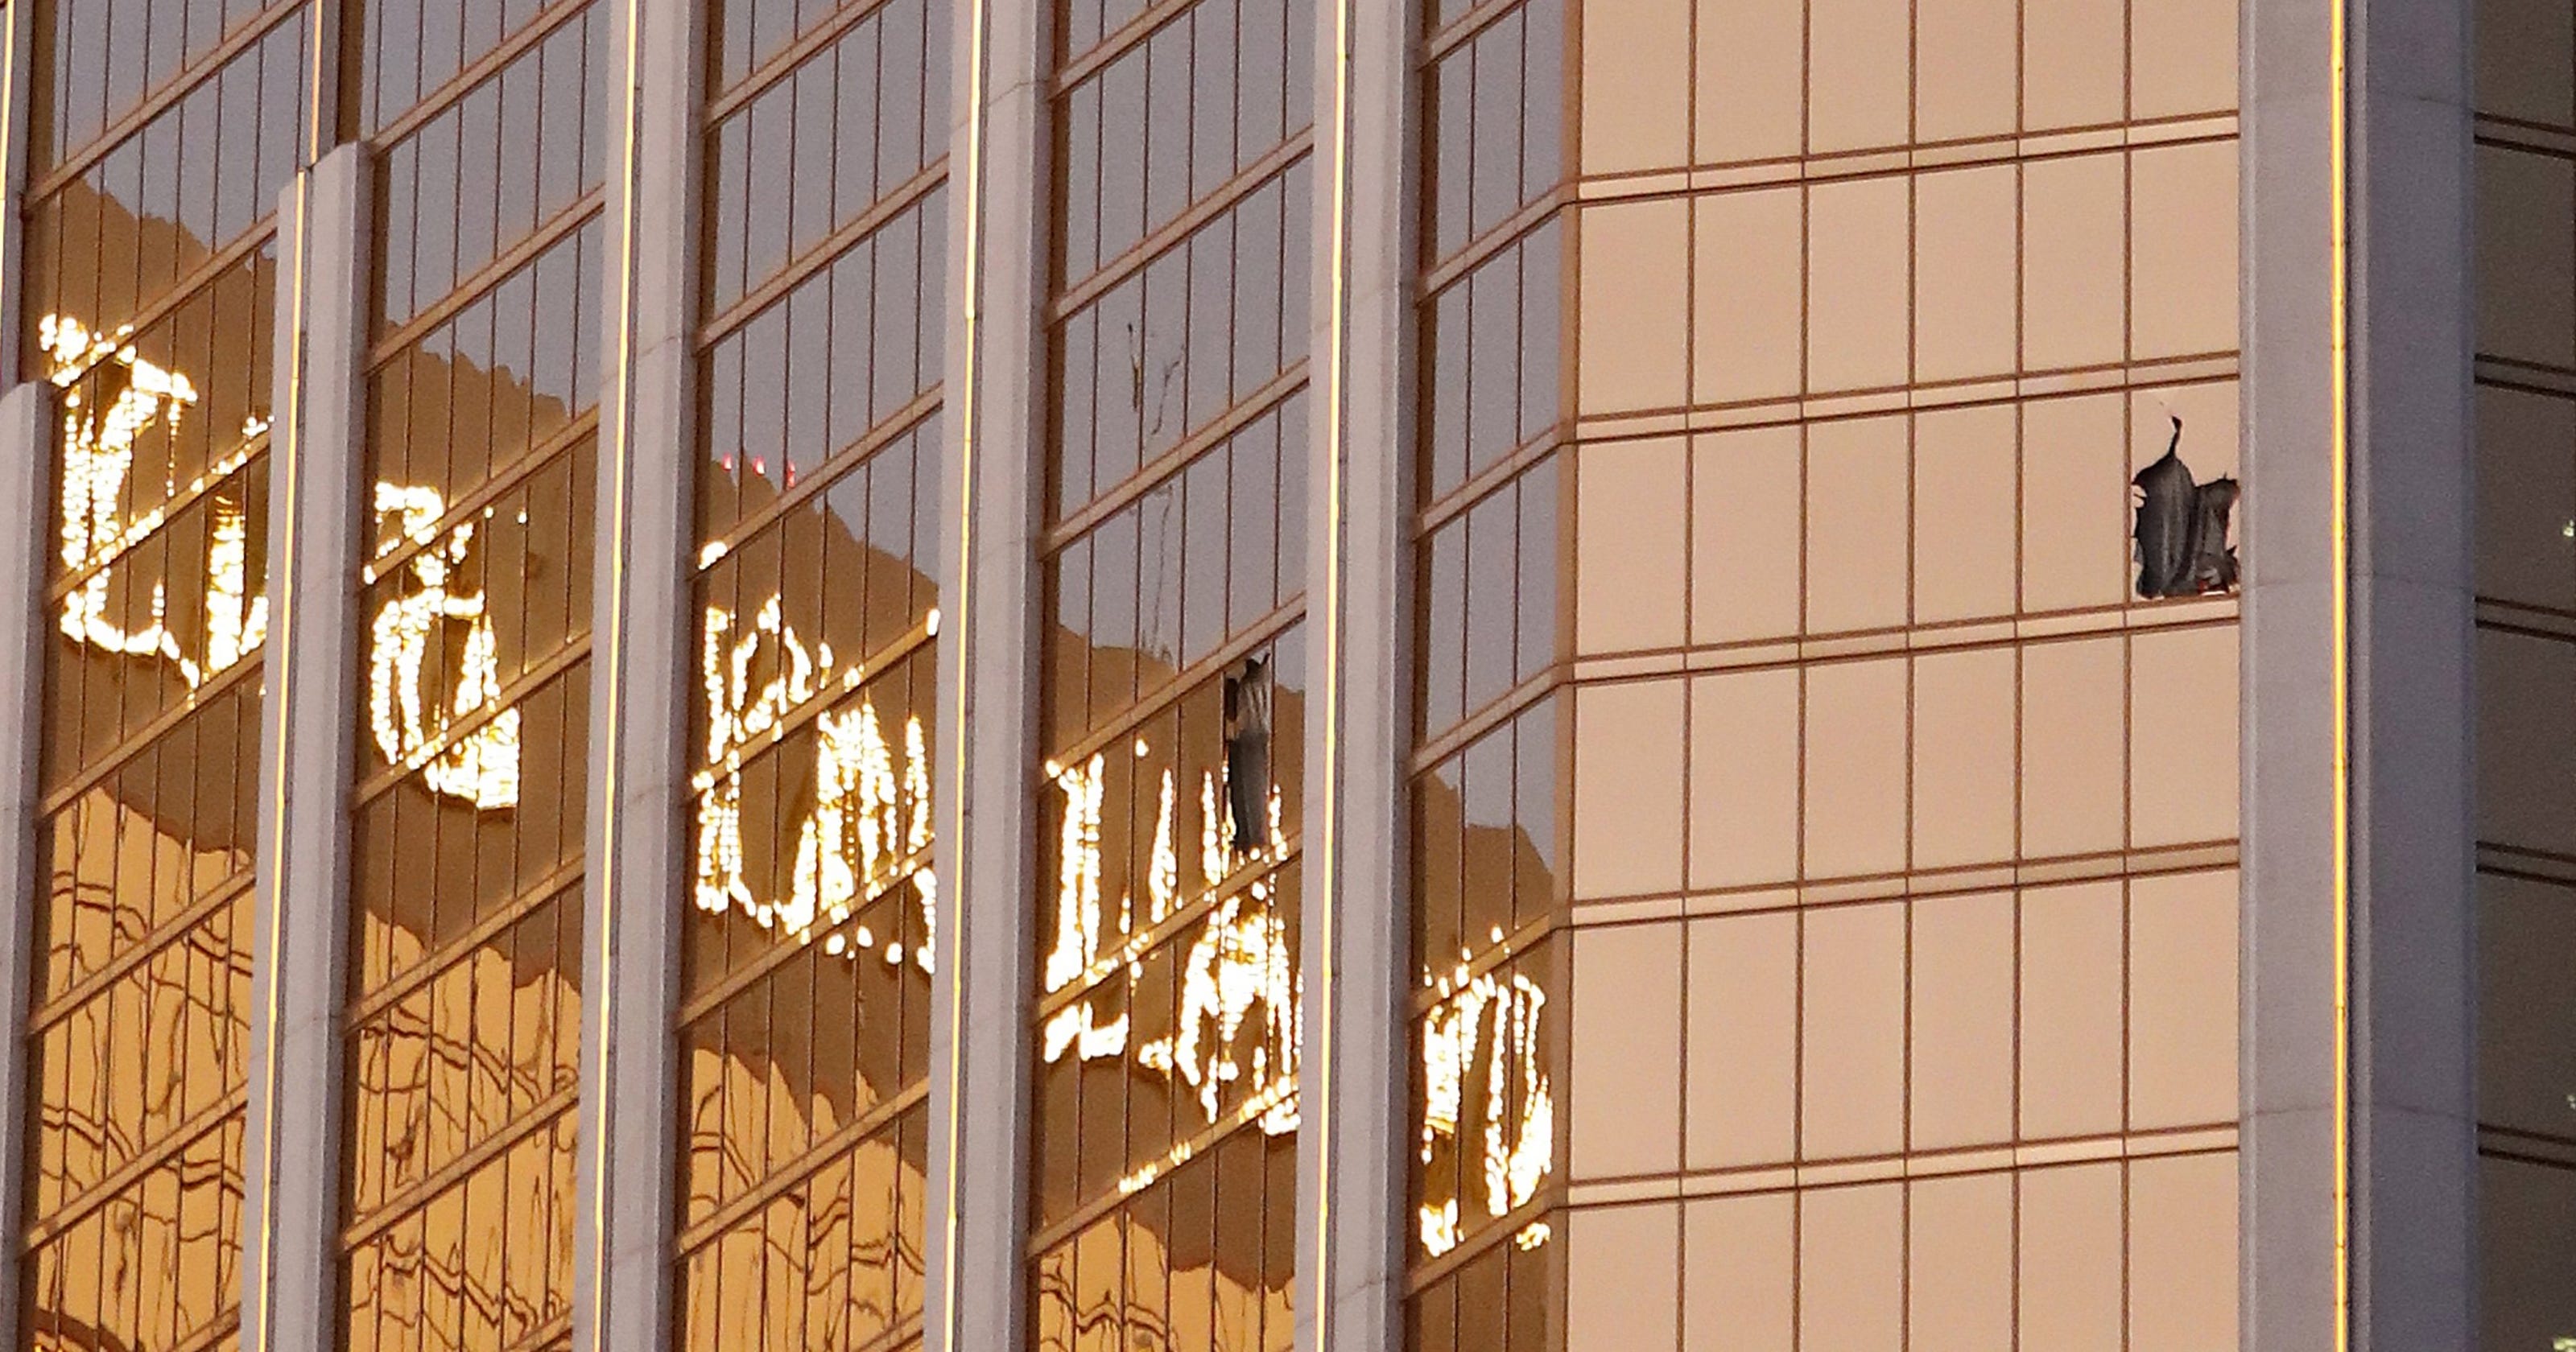 Las Vegas shooting: At least 59 dead in rampage near Mandalay Bay Casino